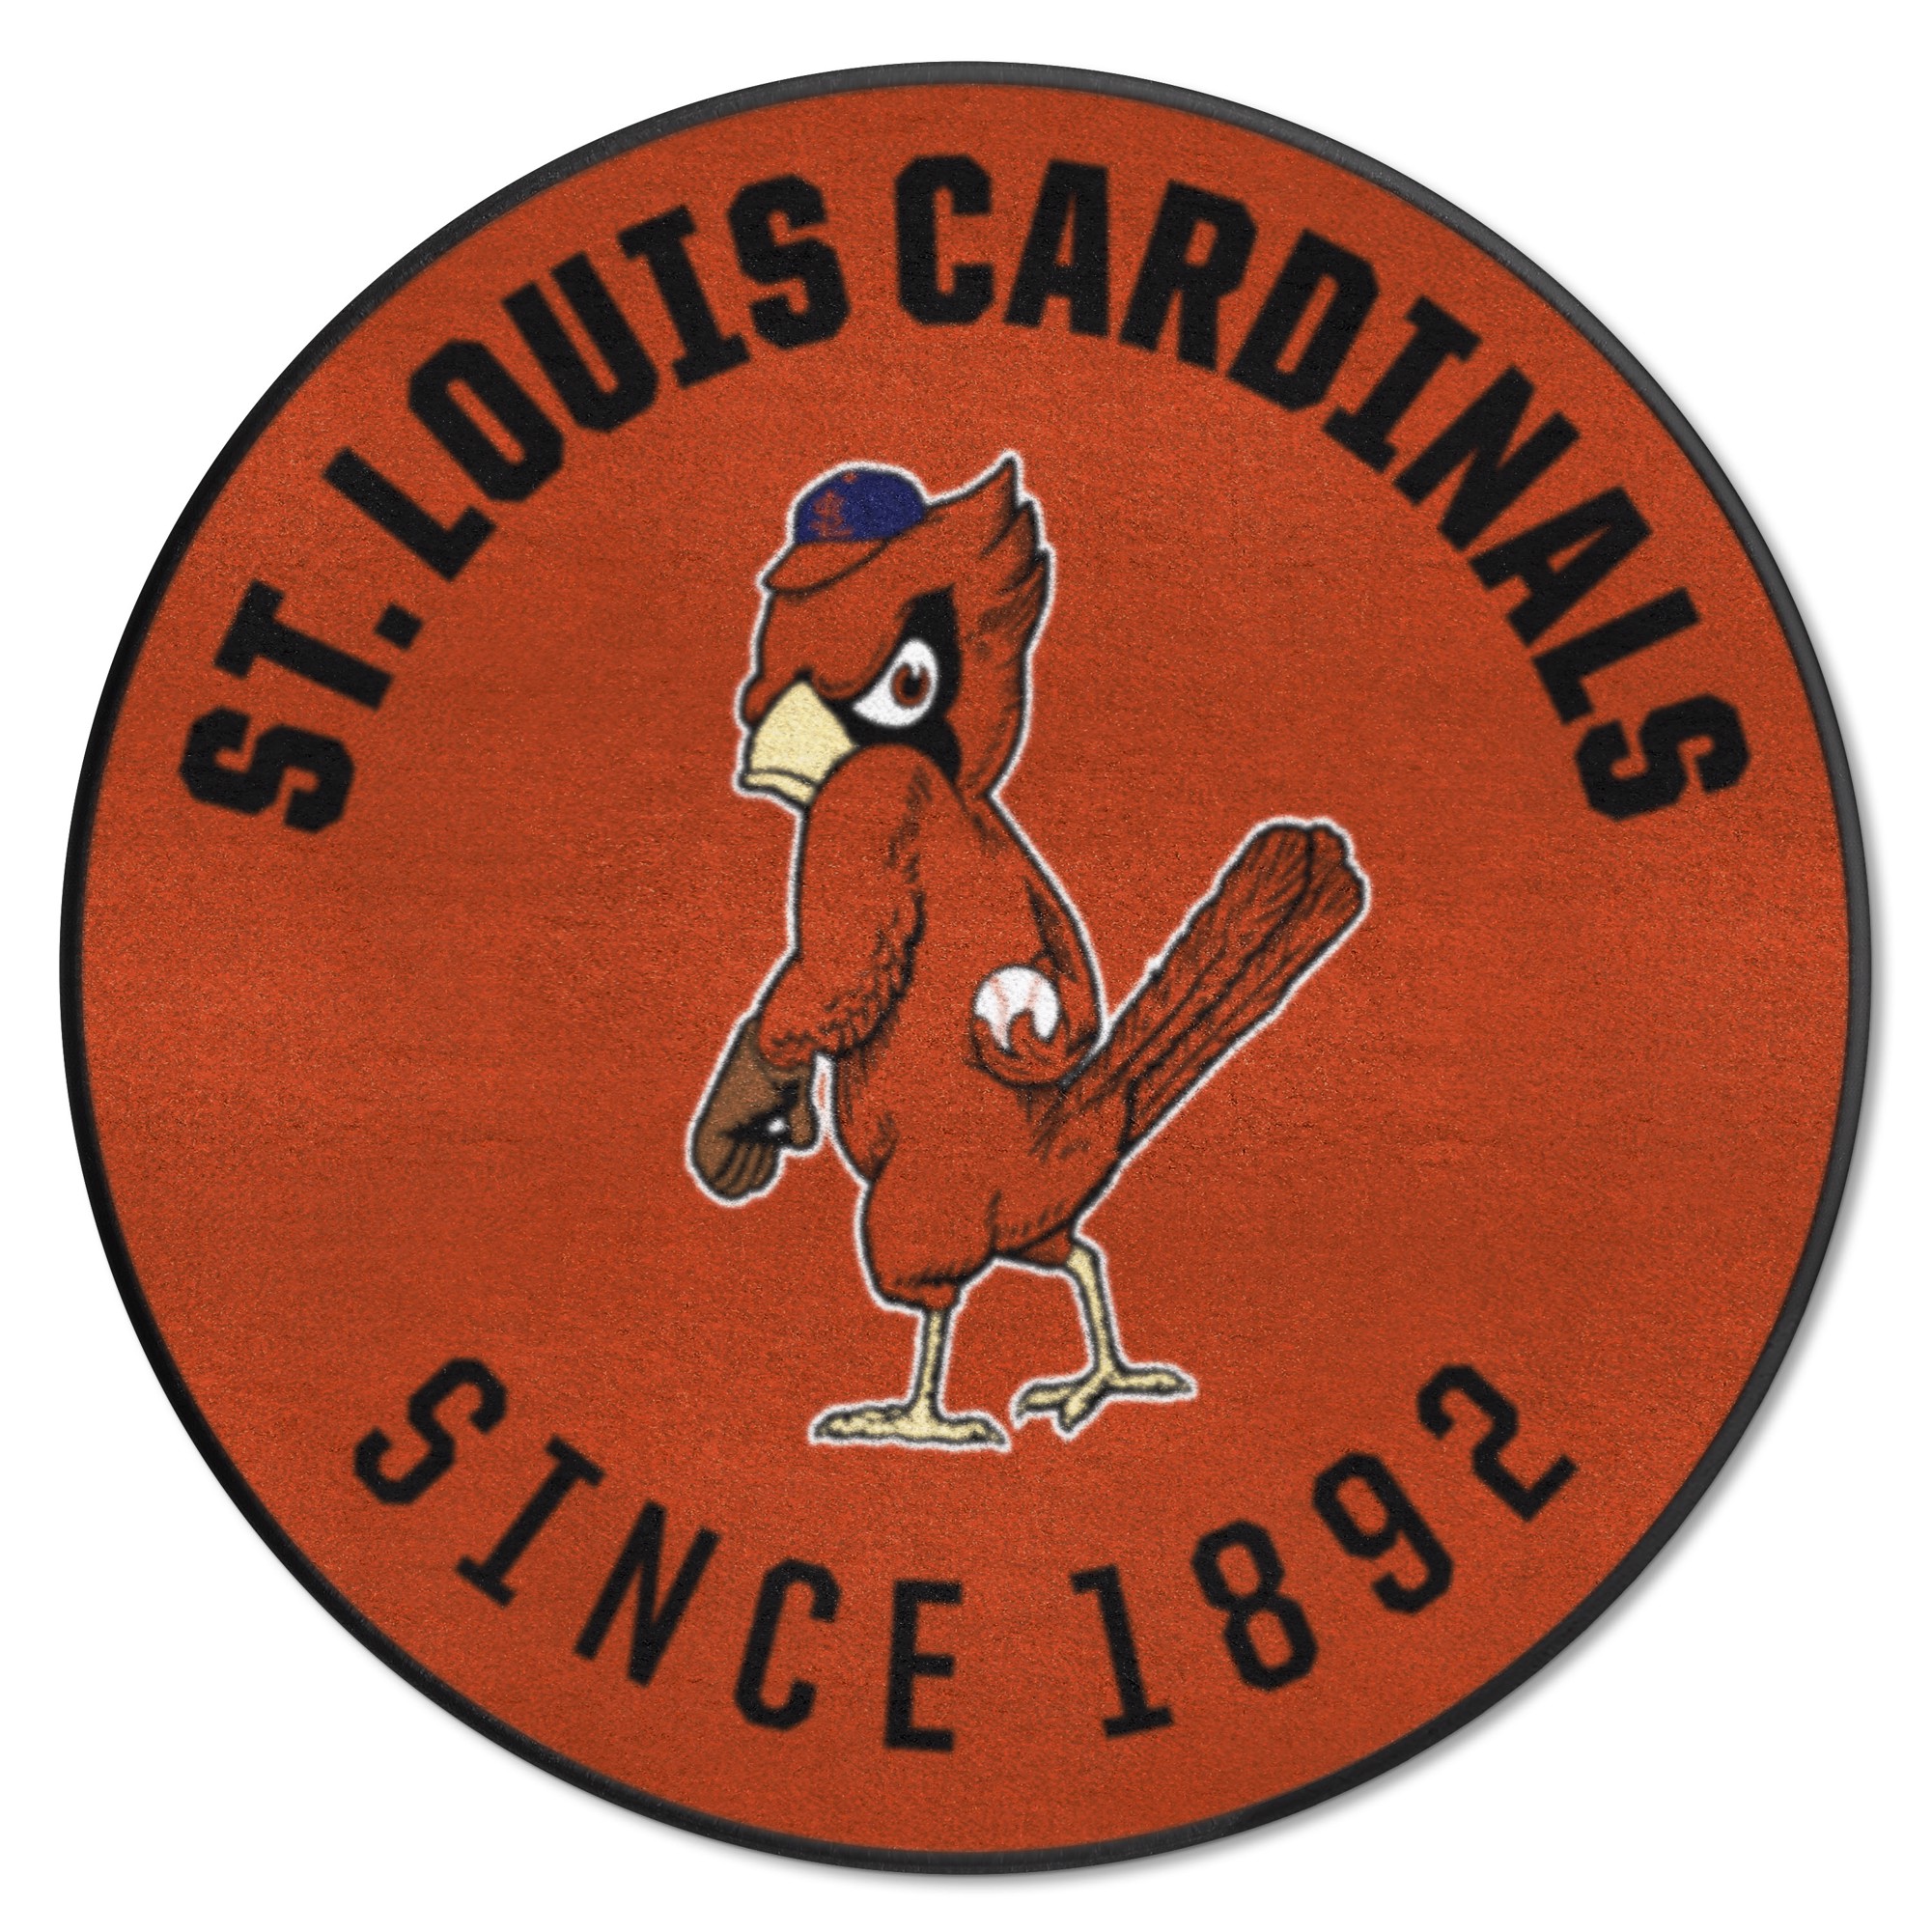 St. Louis Cardinals Starter Mat - Retro Collection